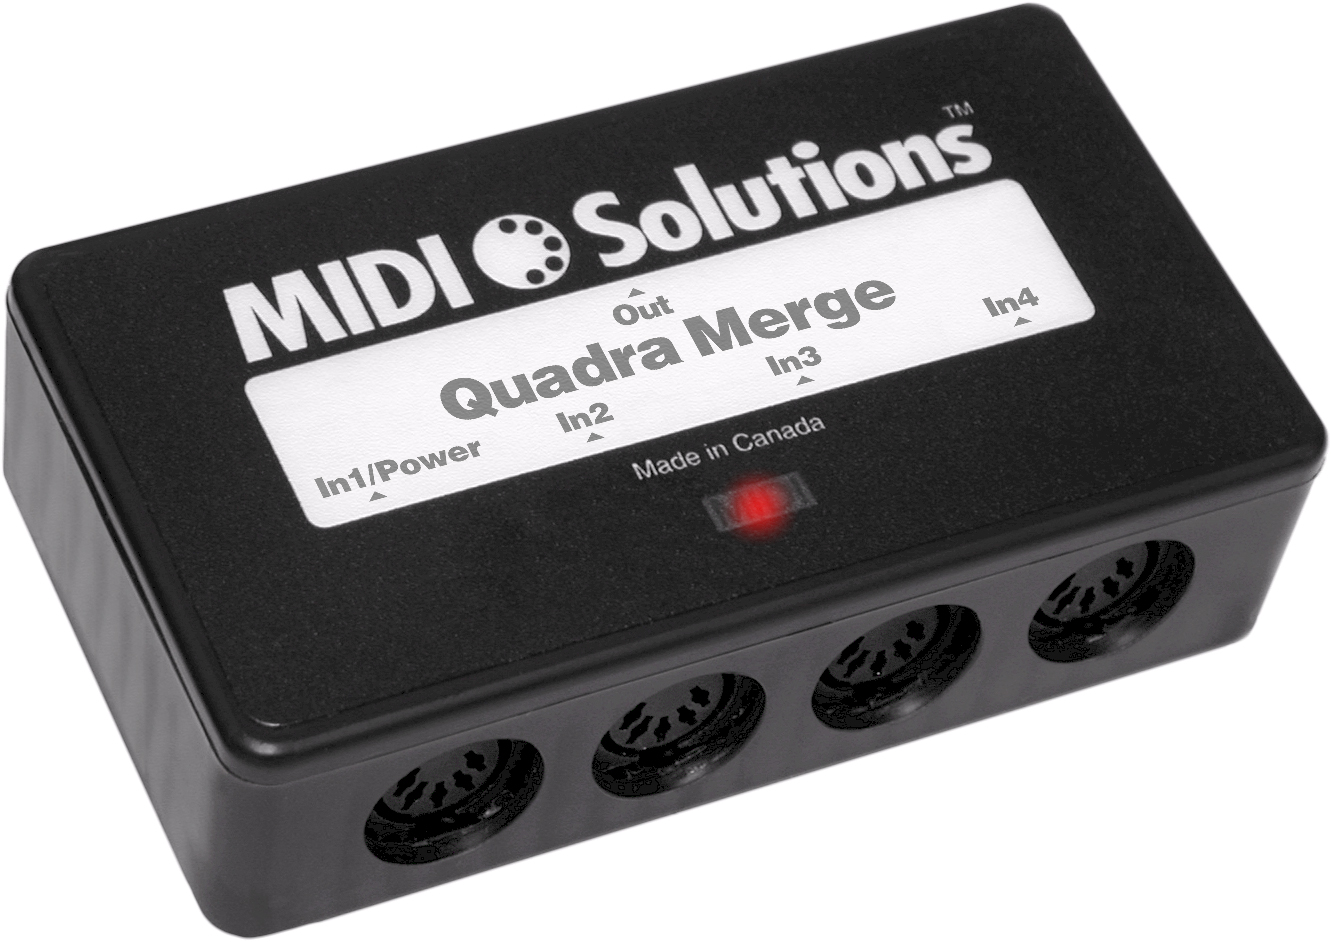 MIDI Solutions MIDI Solutions Quadra Merge 4 Input MIDI Merger Box